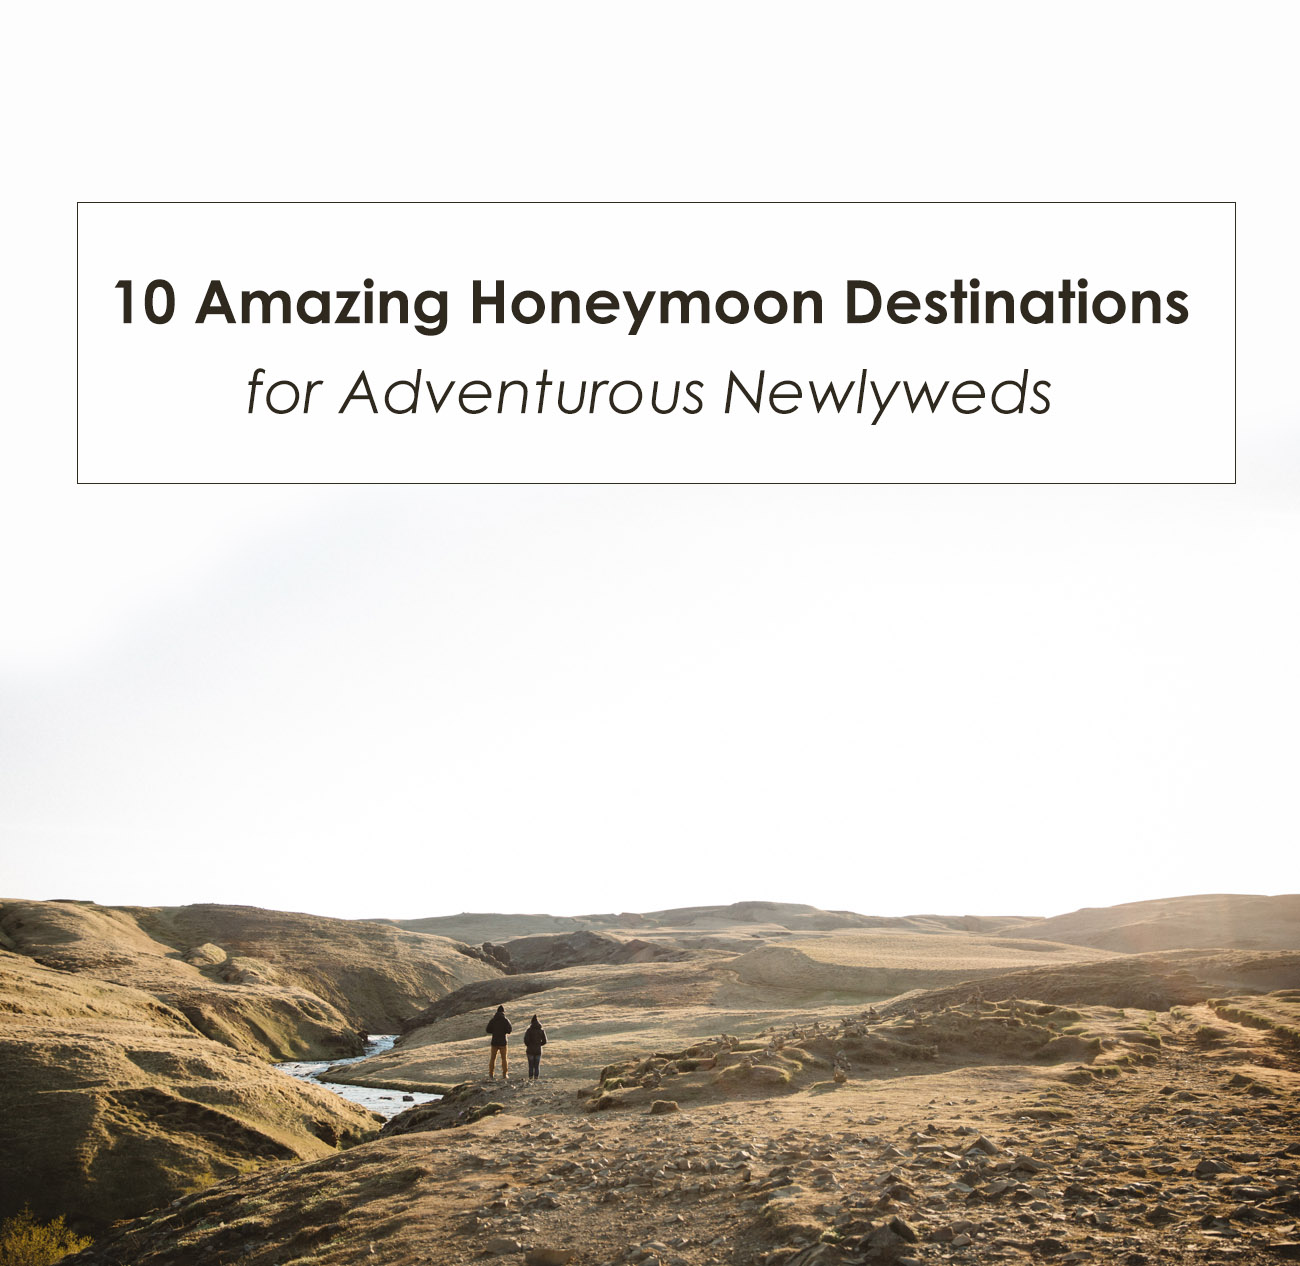 10 Amazing Honeymoon Destinations for Adventurous Newlyweds